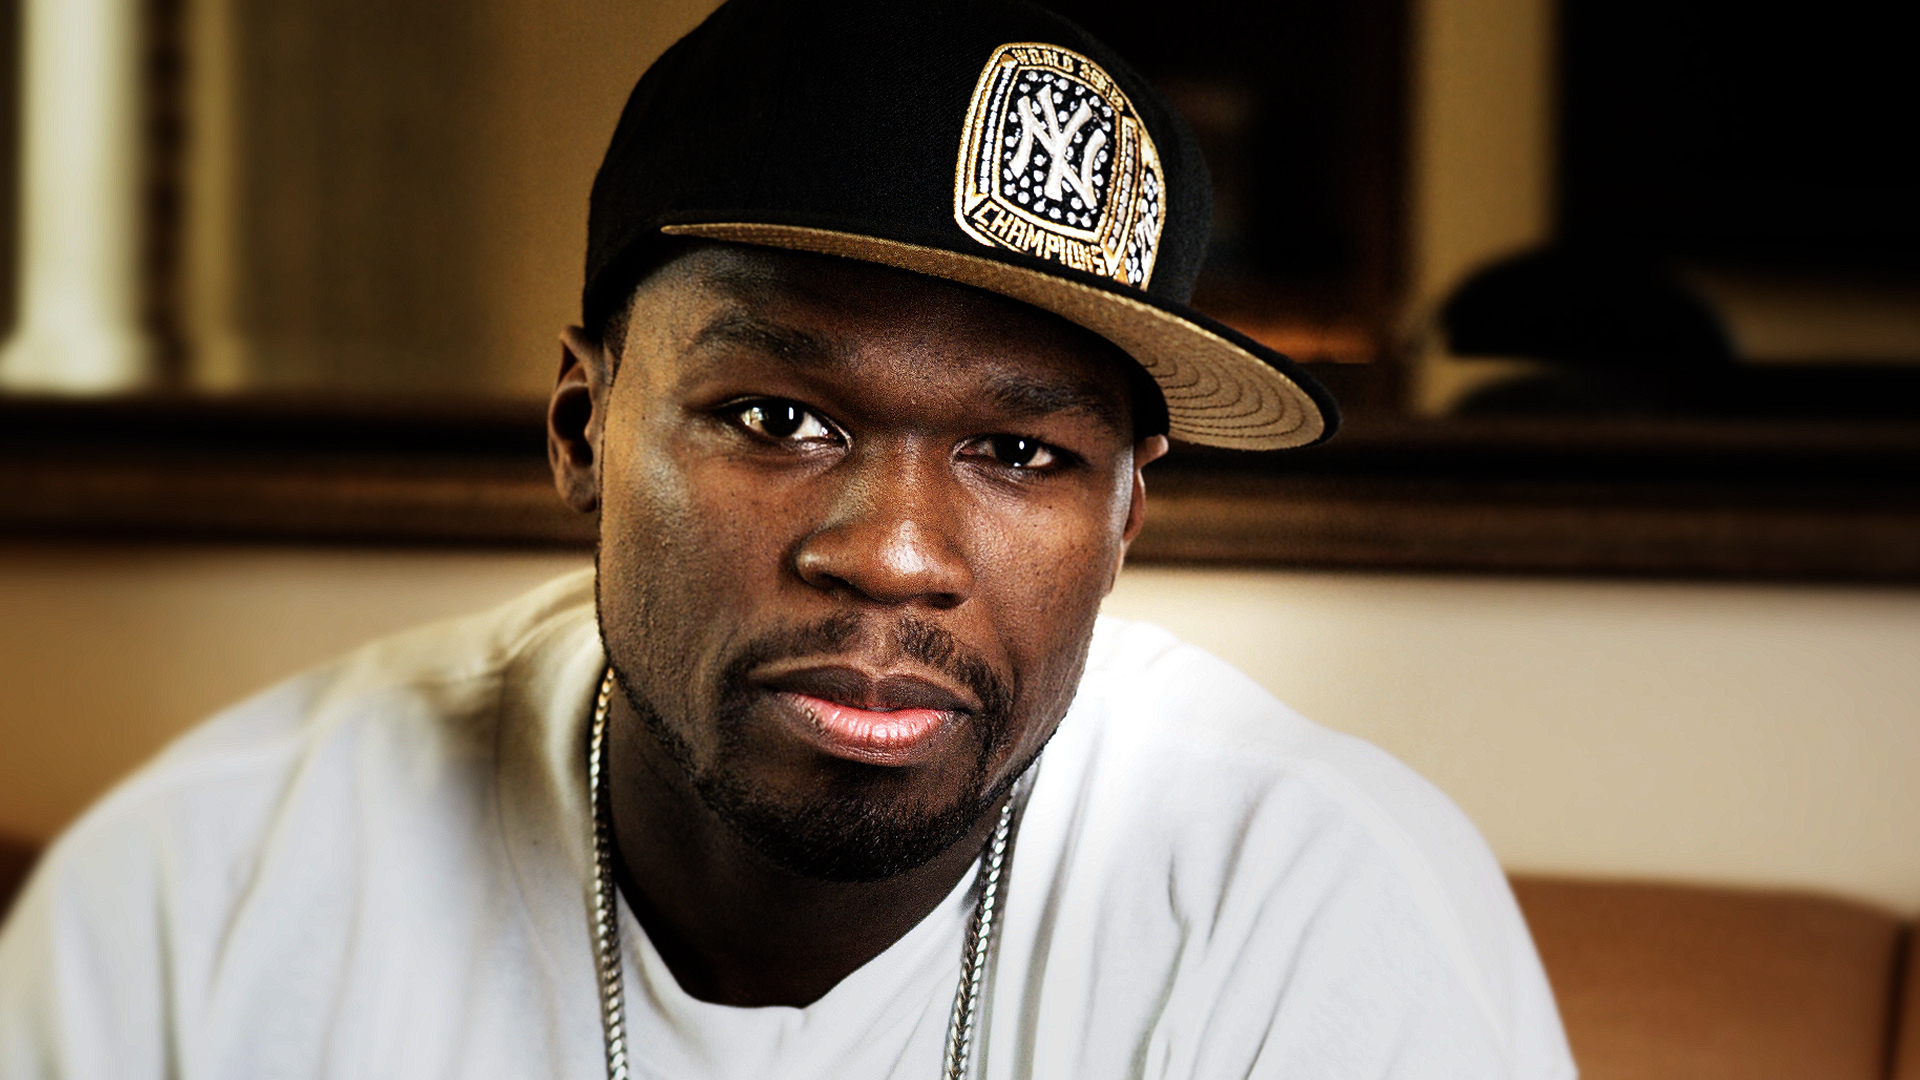 Рэпер 50 Cent